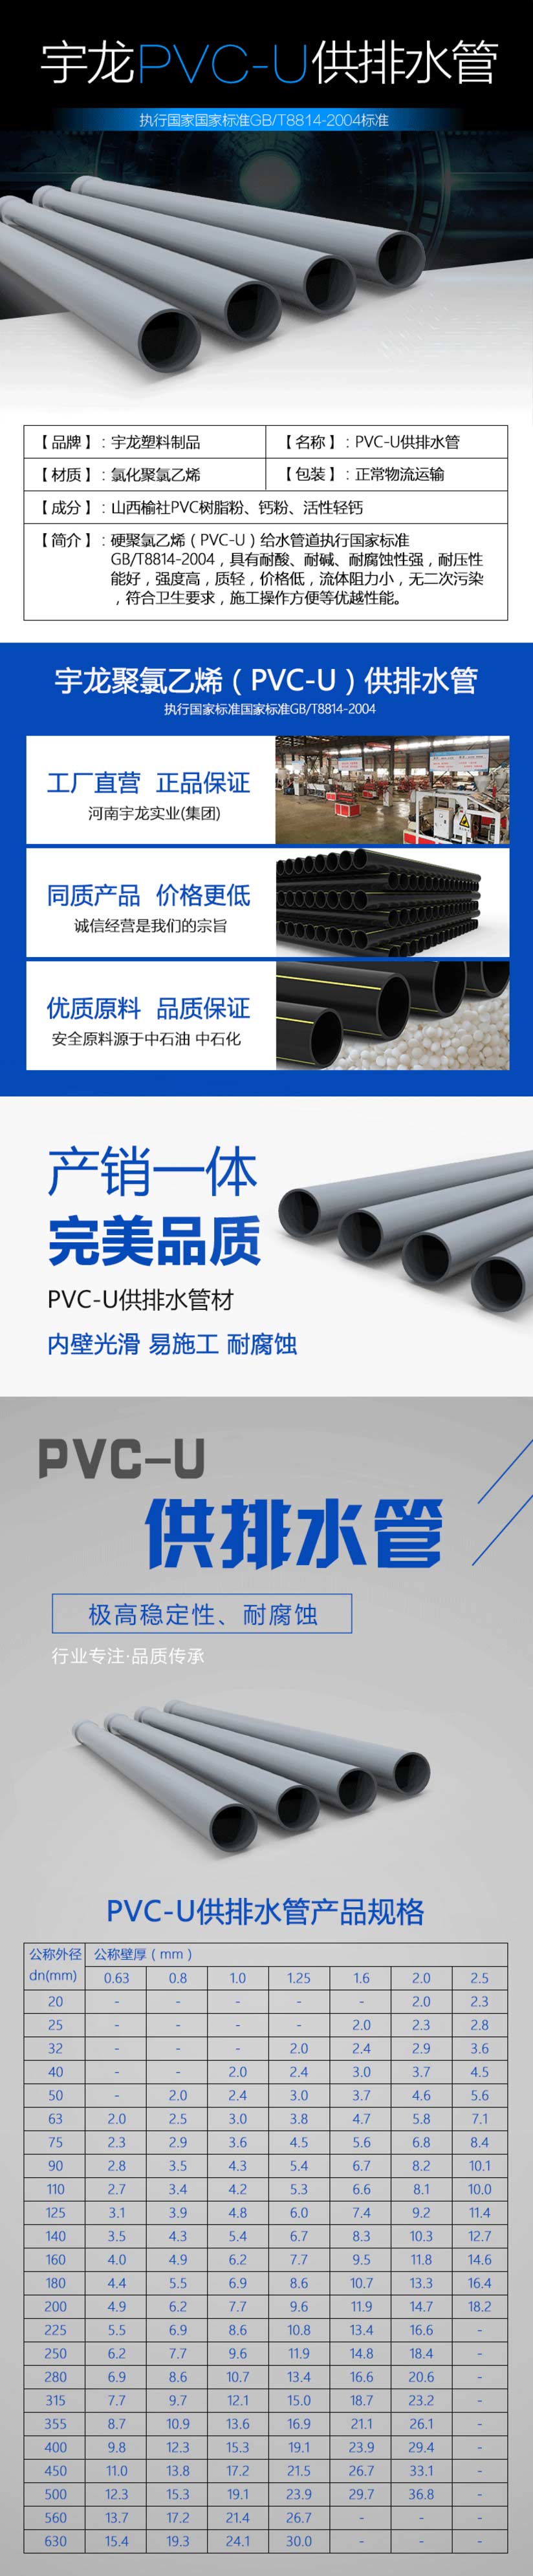 PVC-U供水管.jpg